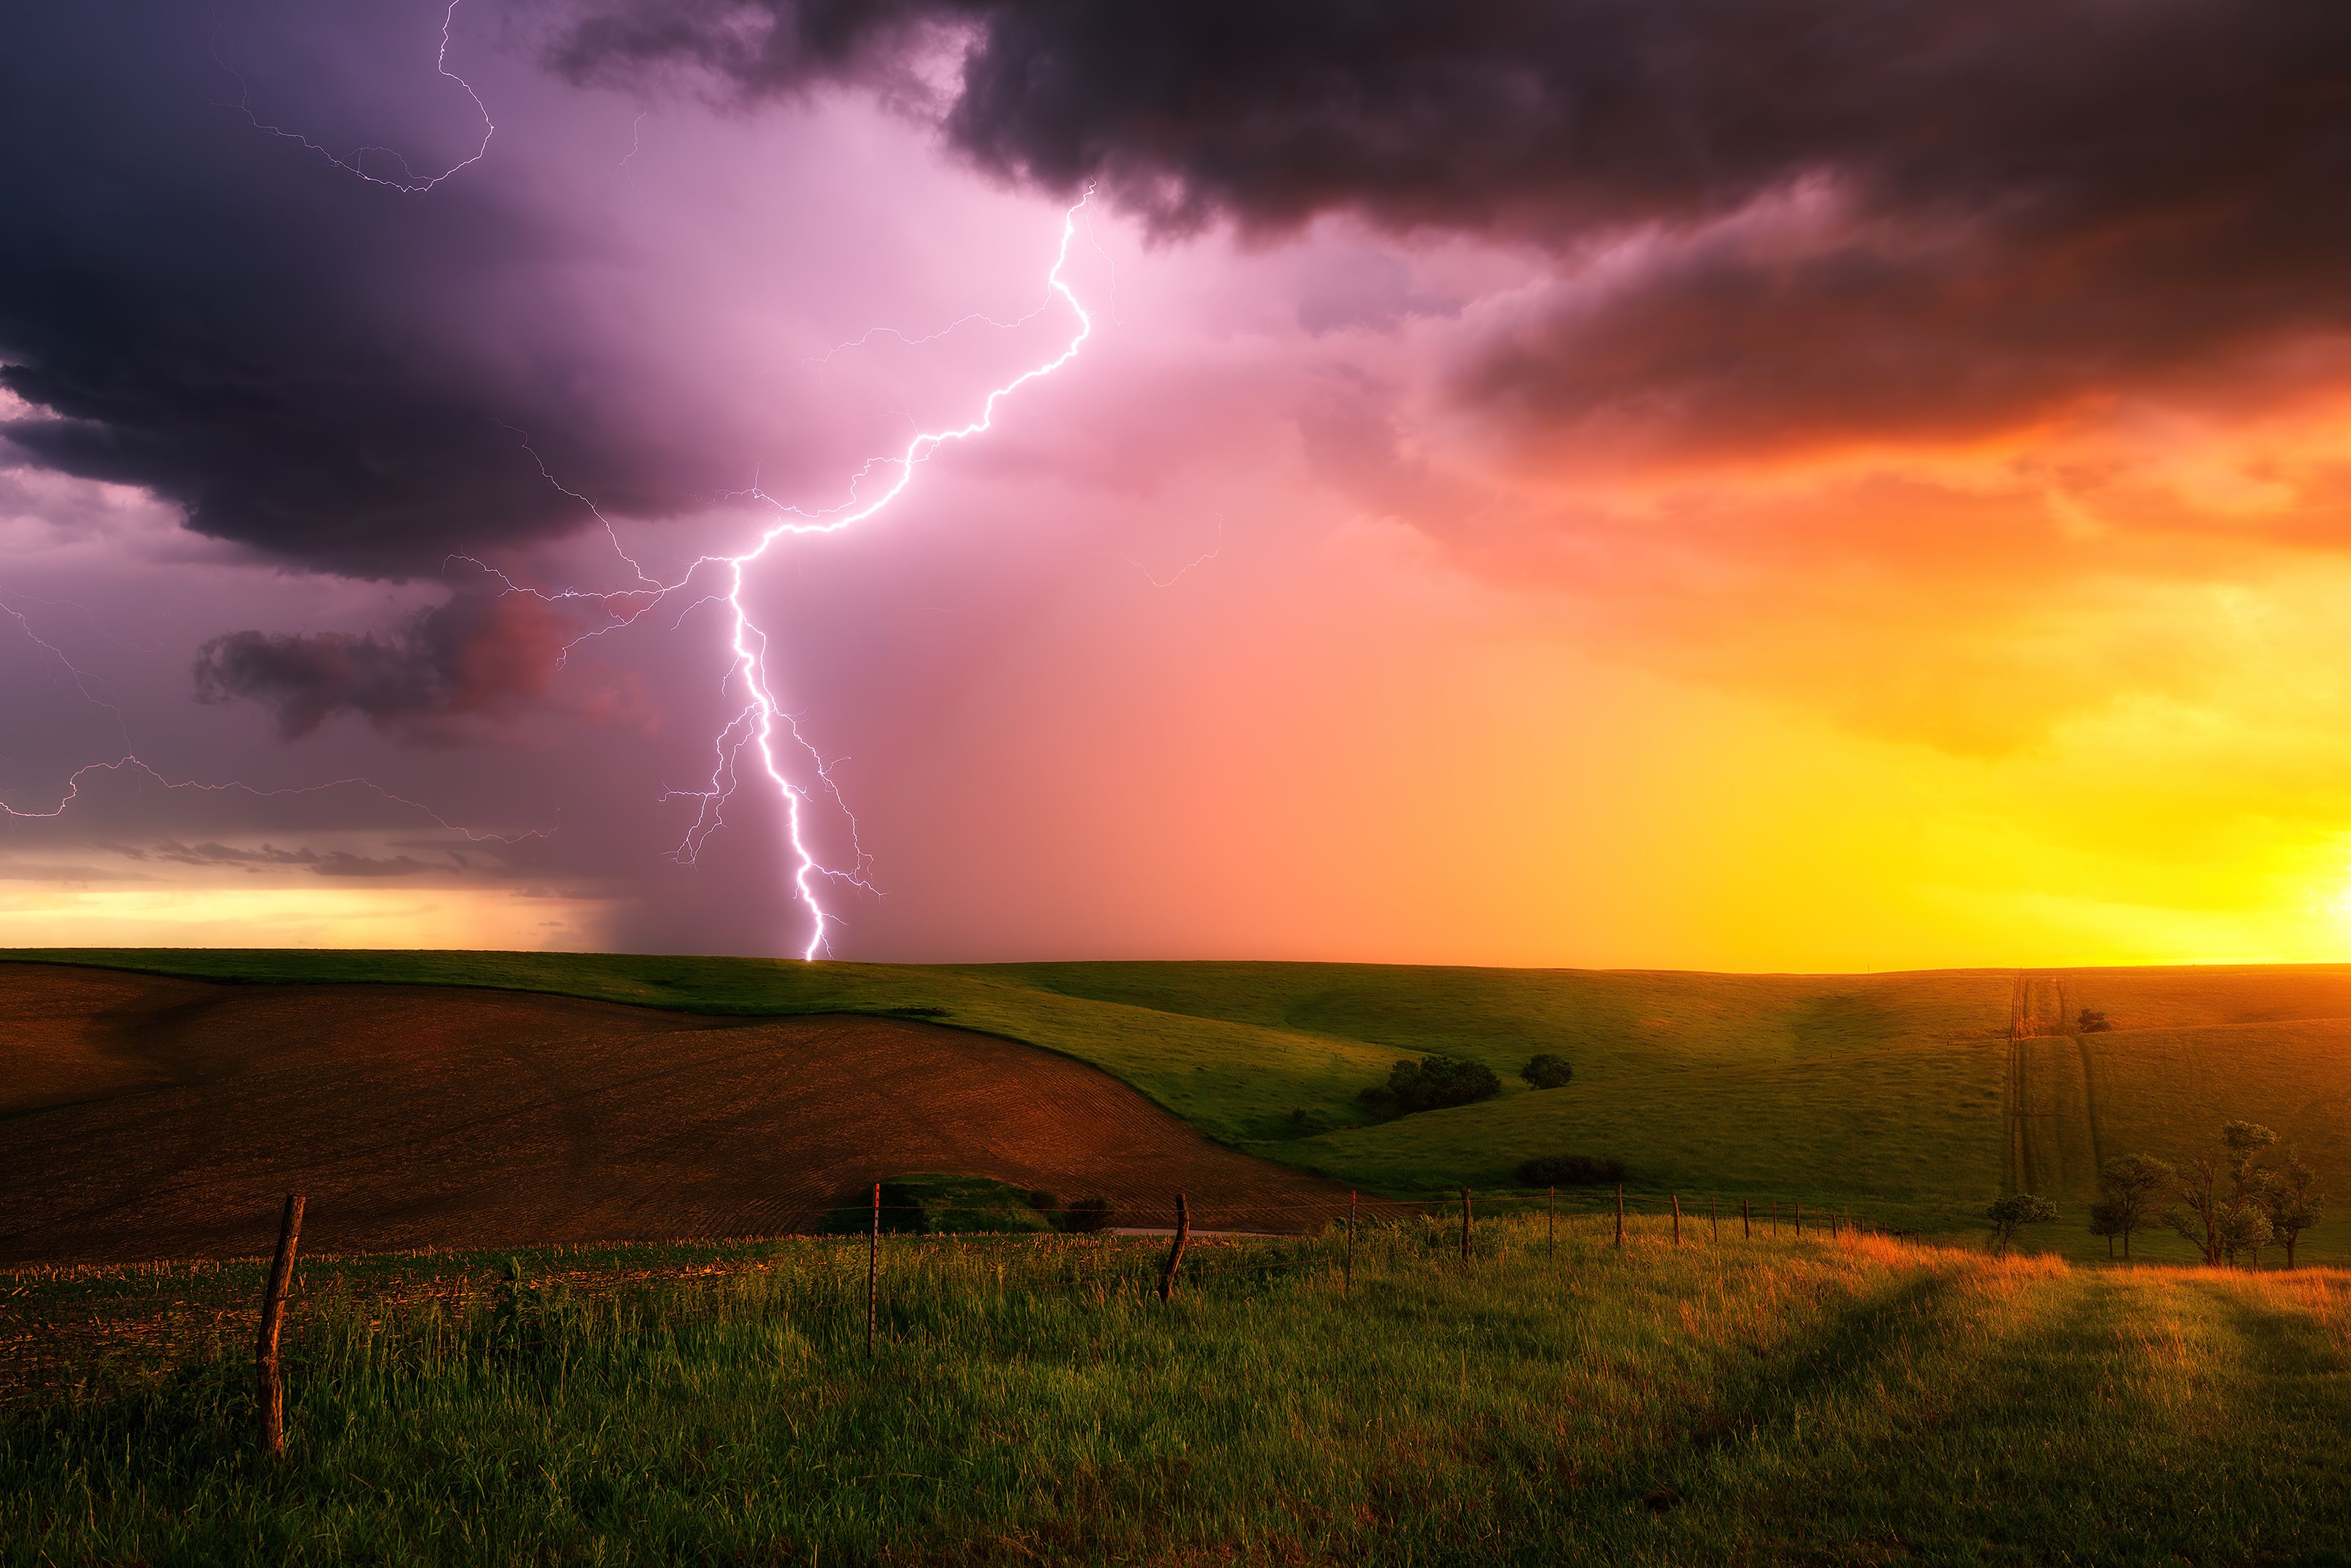 2000 Free Thunderstorm  Storm Images  Pixabay